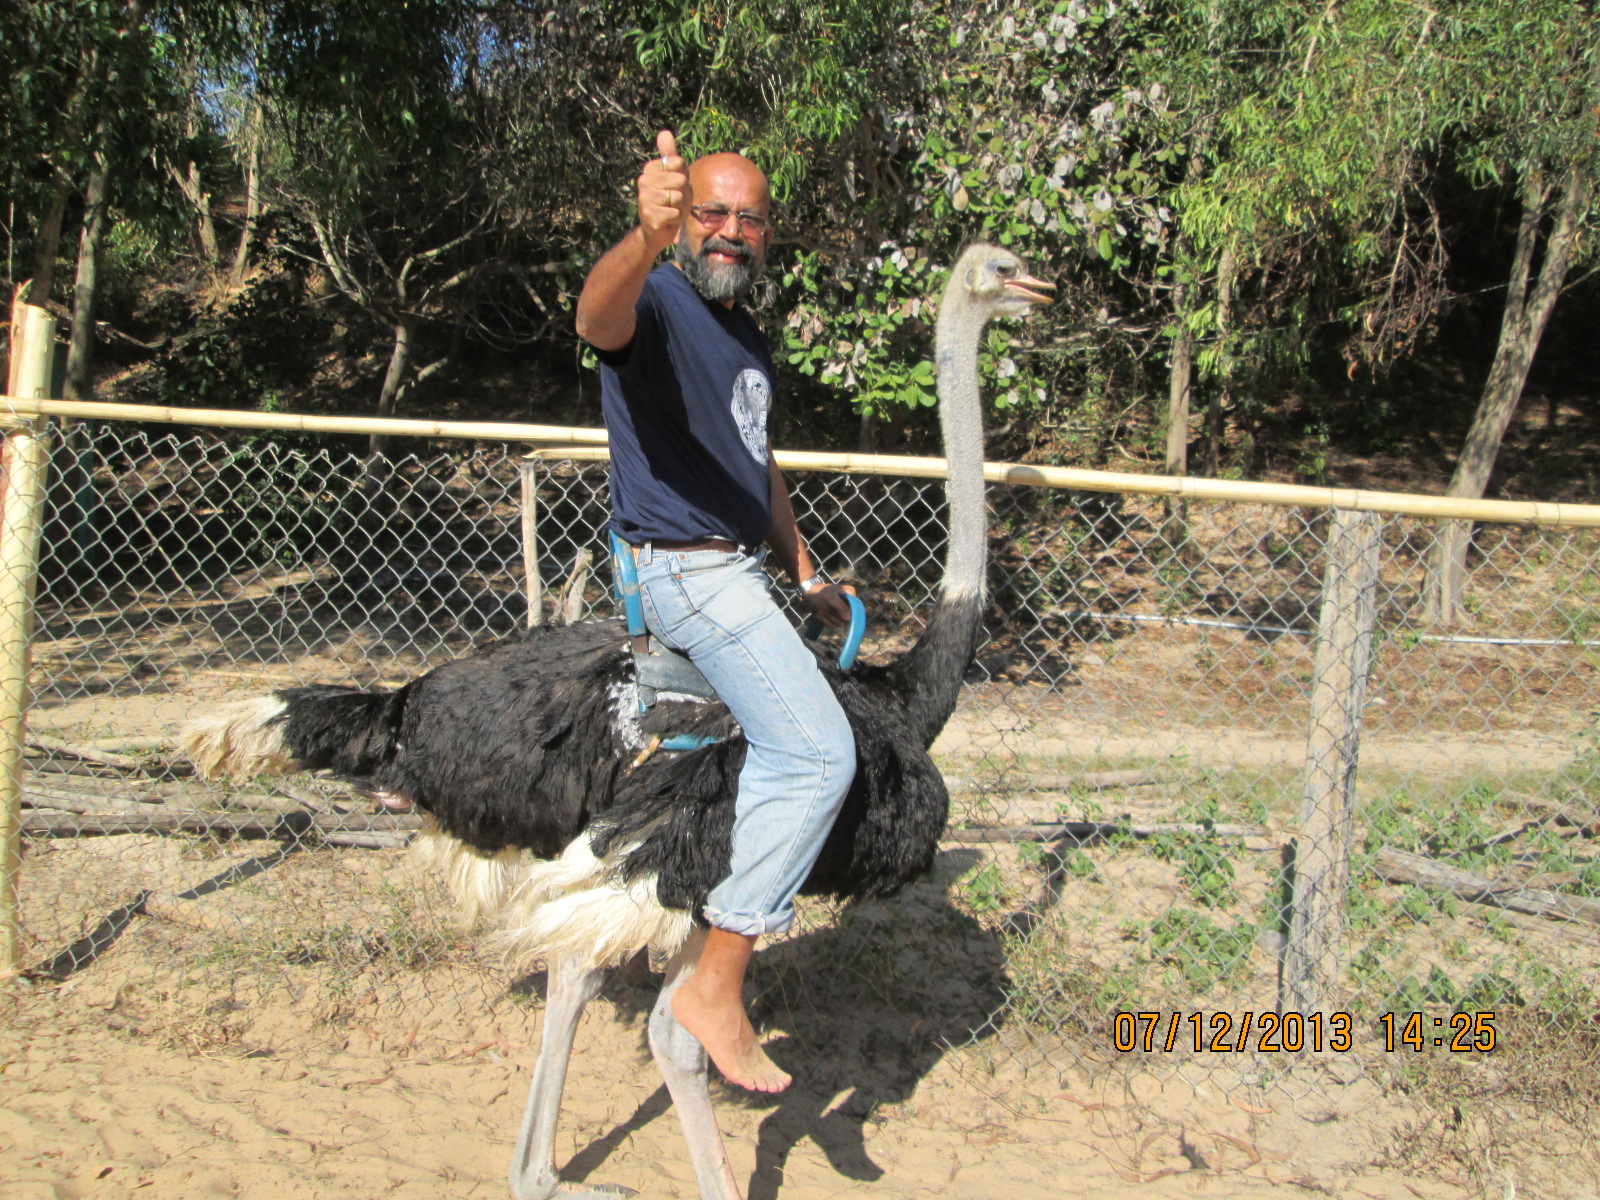 ostrich riding ile ilgili gÃ¶rsel sonucu